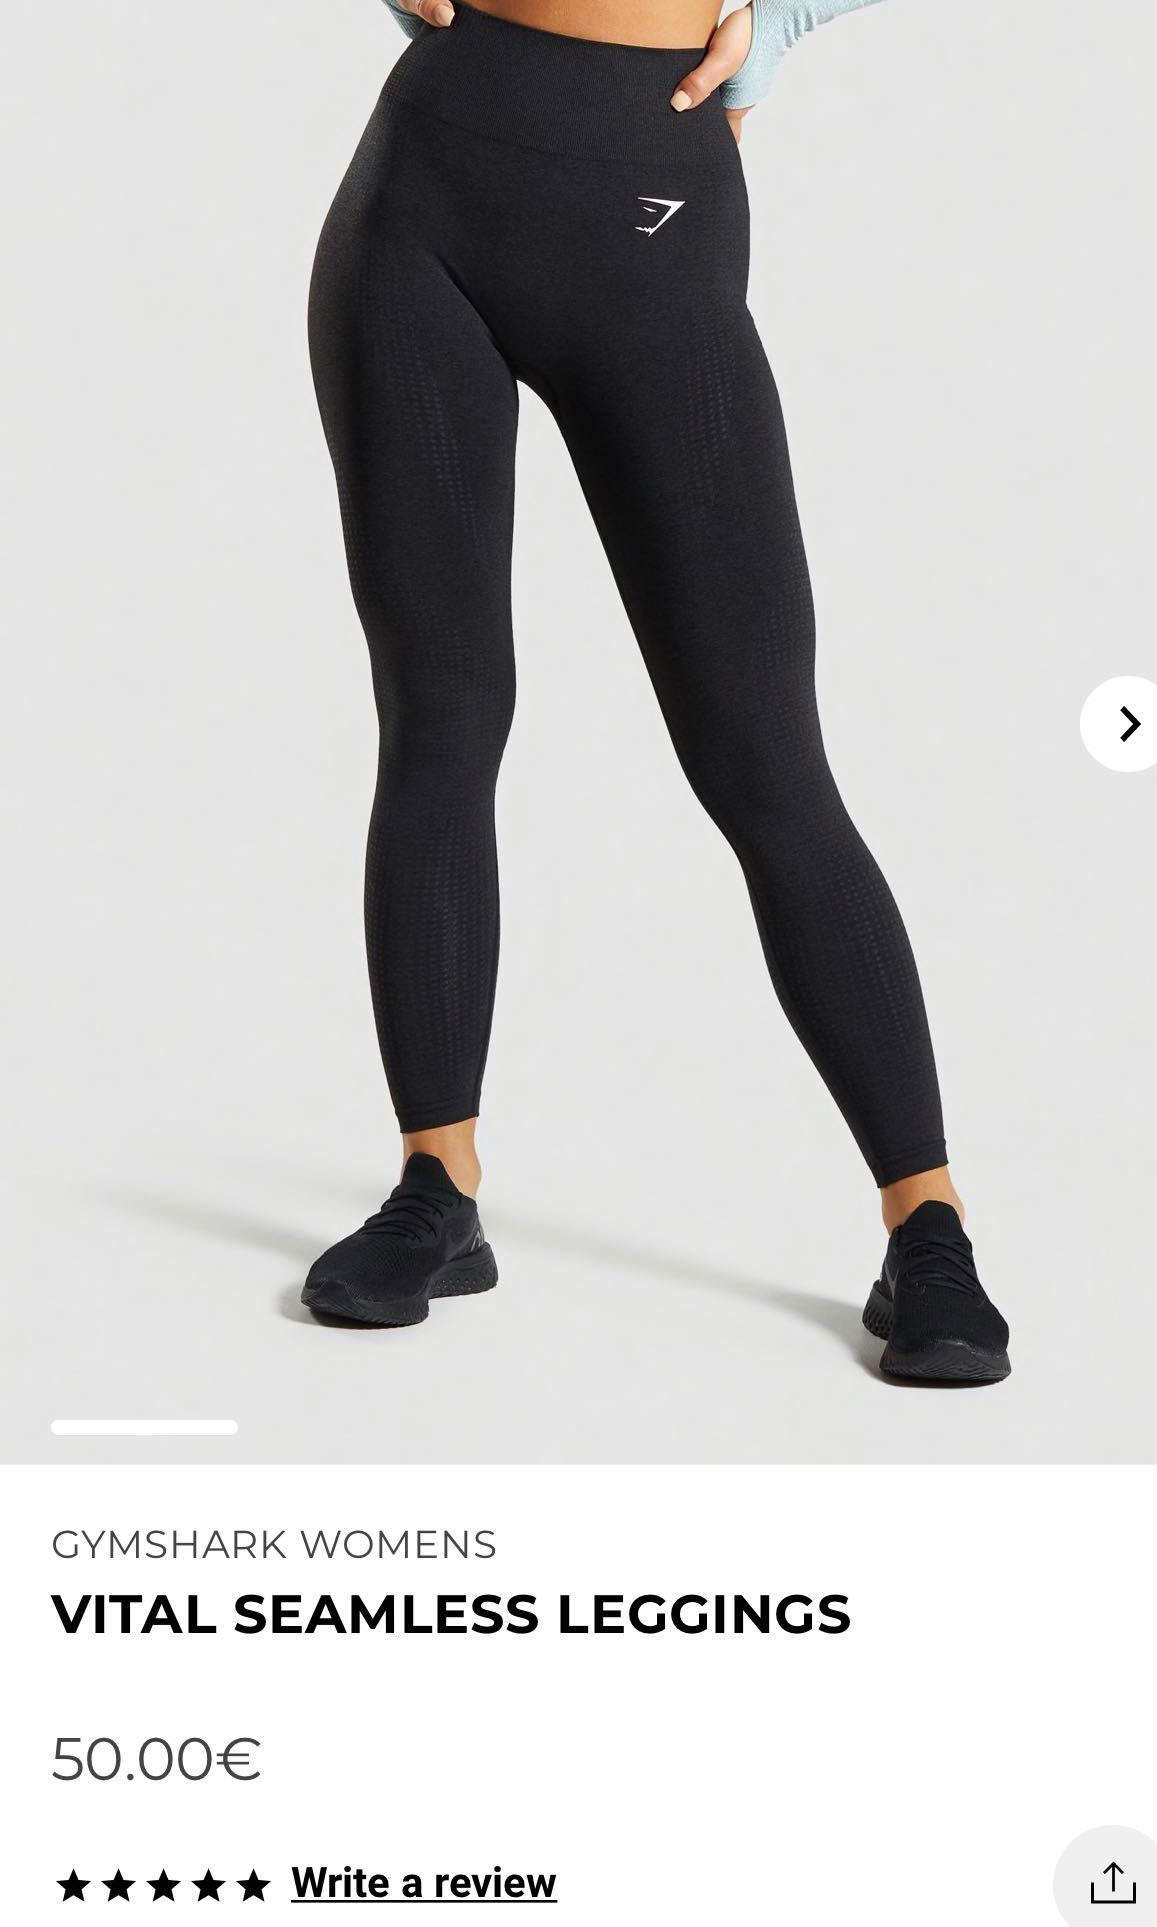 Gymshark Vital Seamless Leggings M size, Women's Fashion